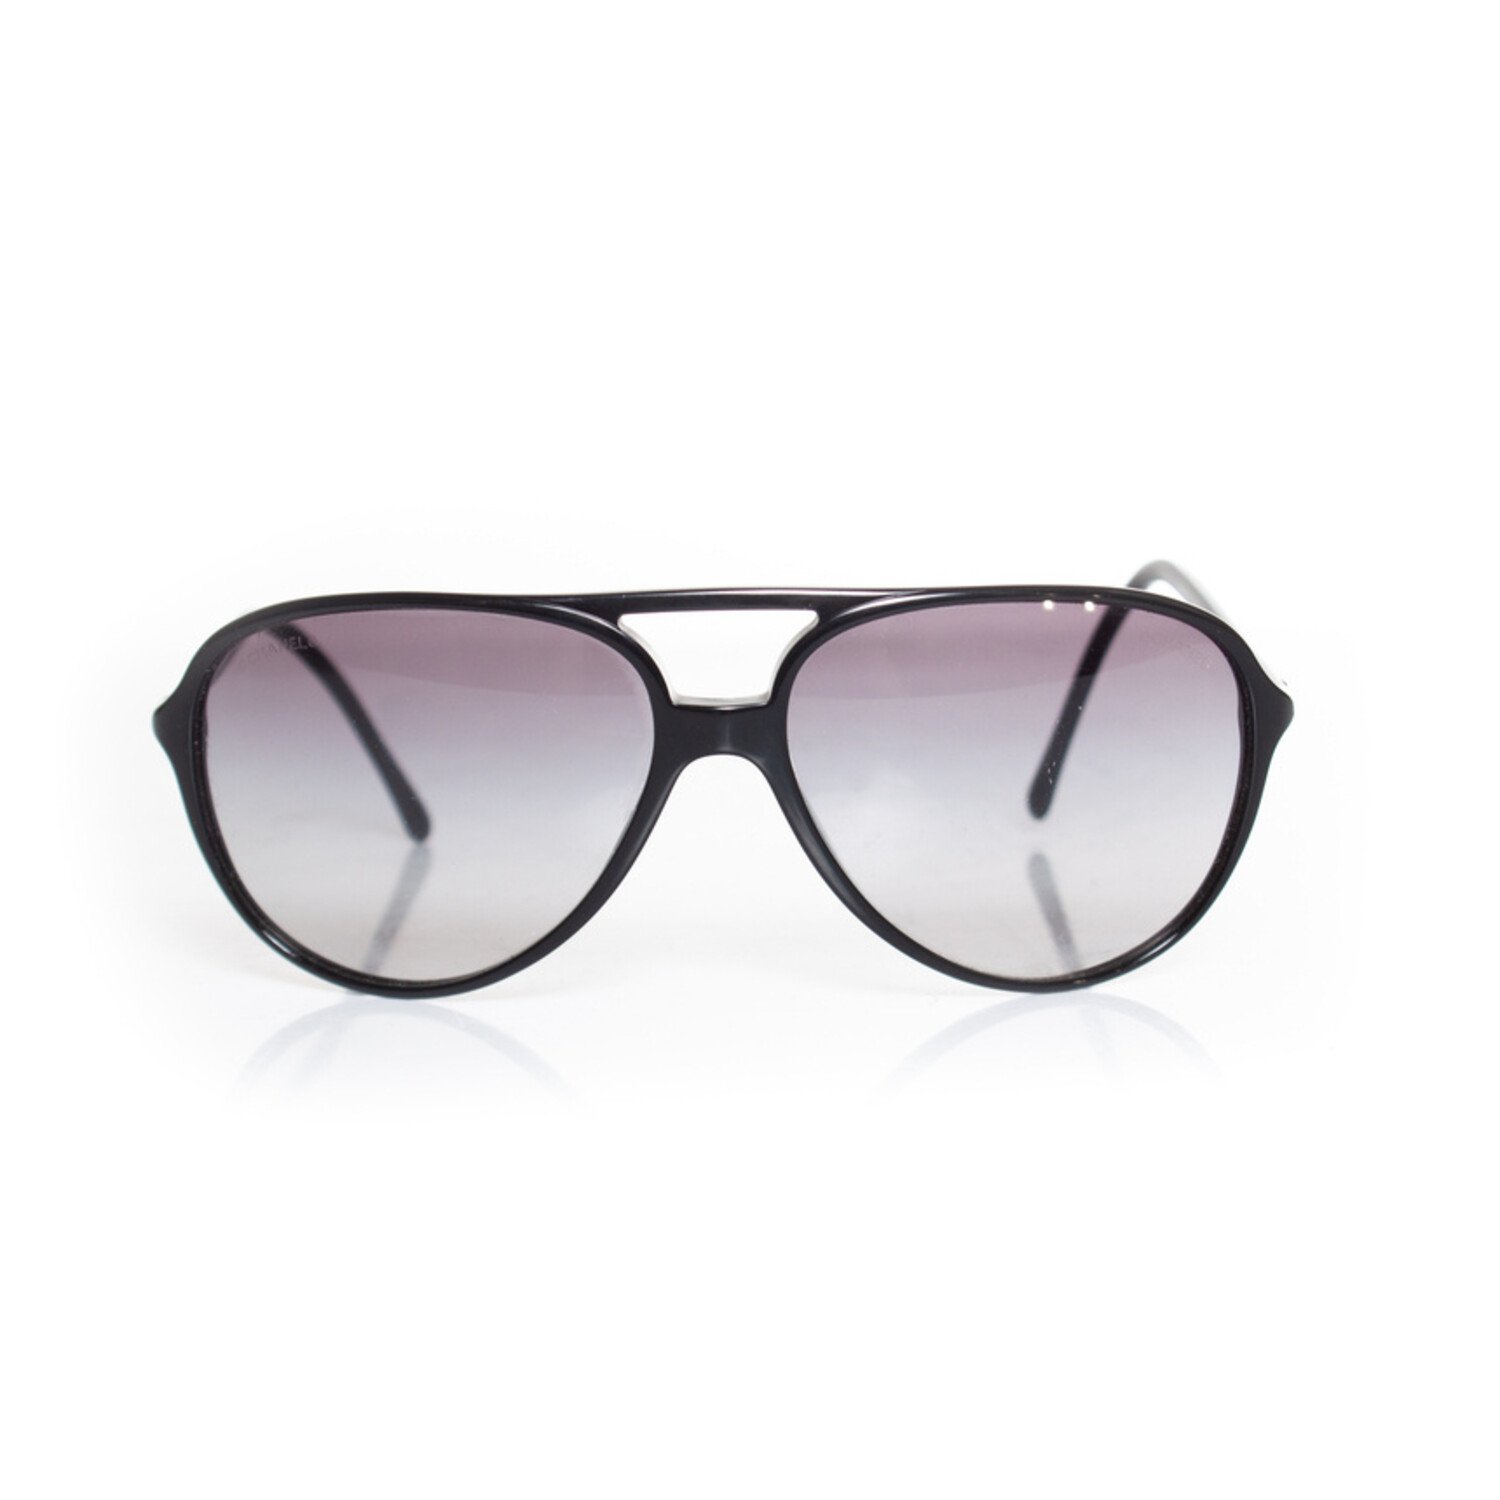 CHANEL Pilot Sunglasses | Pilot sunglasses, Sunglasses, Aviator sunglasses